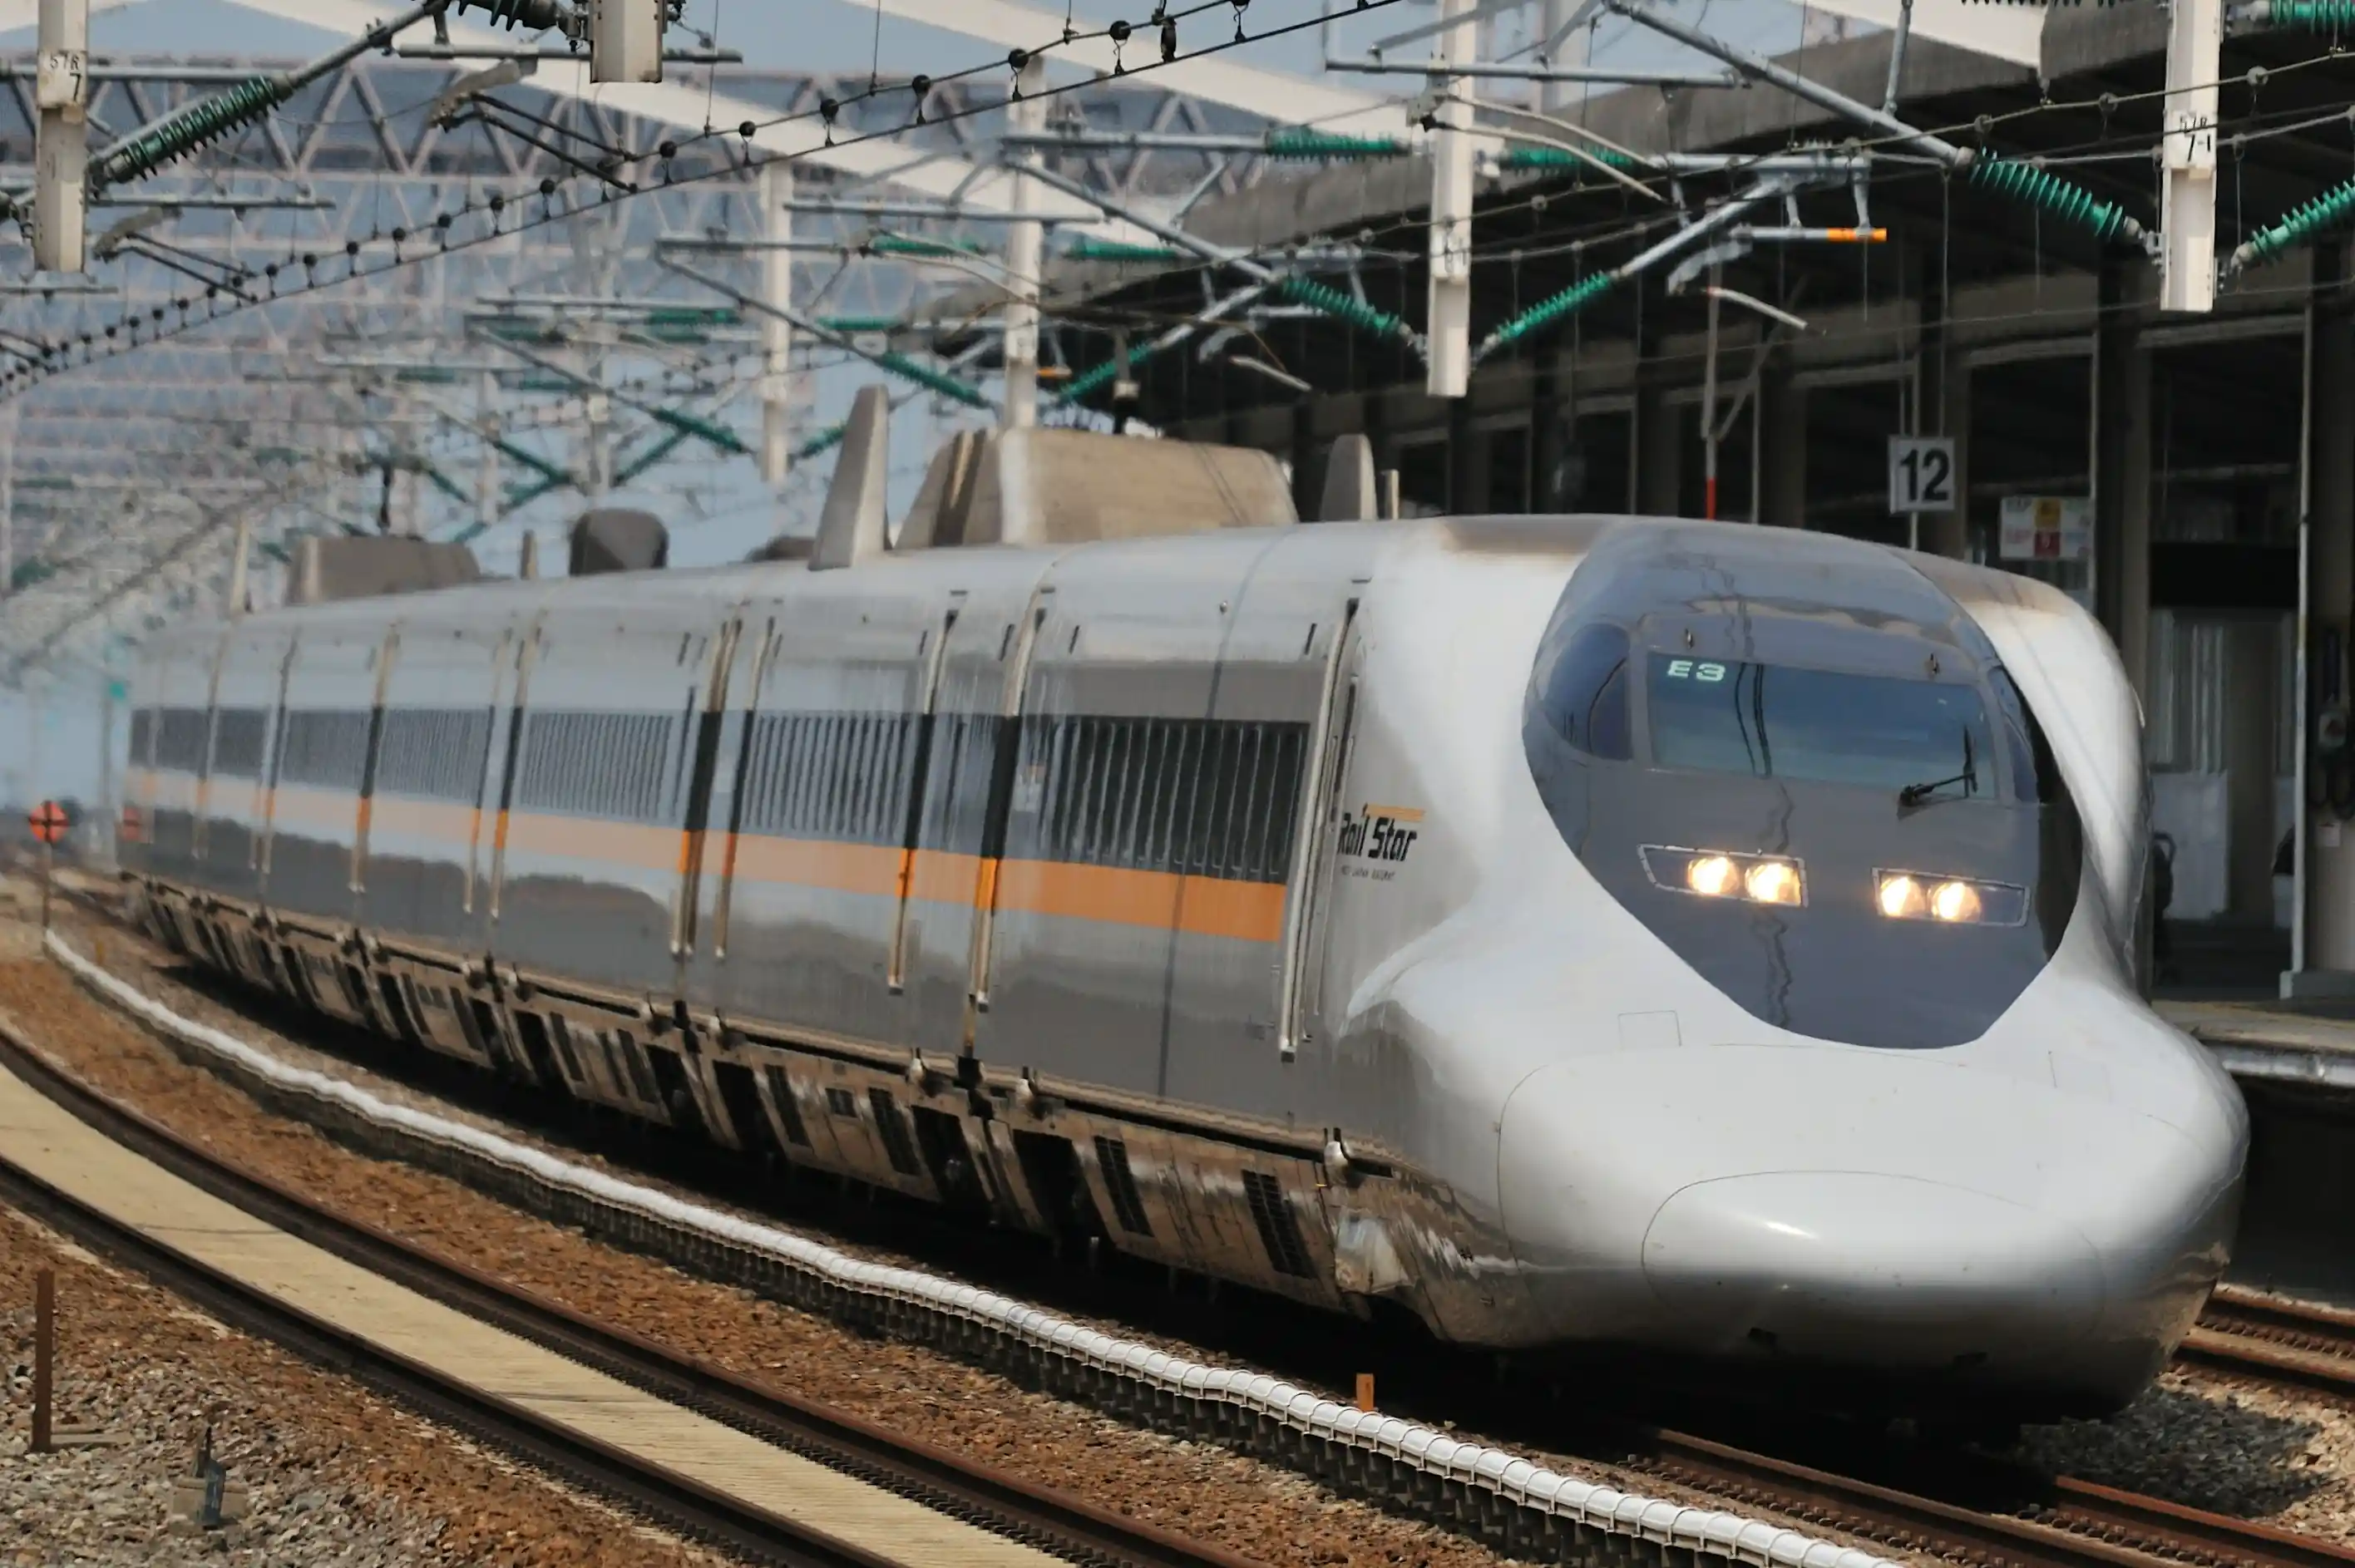 Takeshi Kuboki - Shinkansen 700 Rail Star, CC 表示 2.0, https://commons.wikimedia.org/w/index.php?curid=31858298による